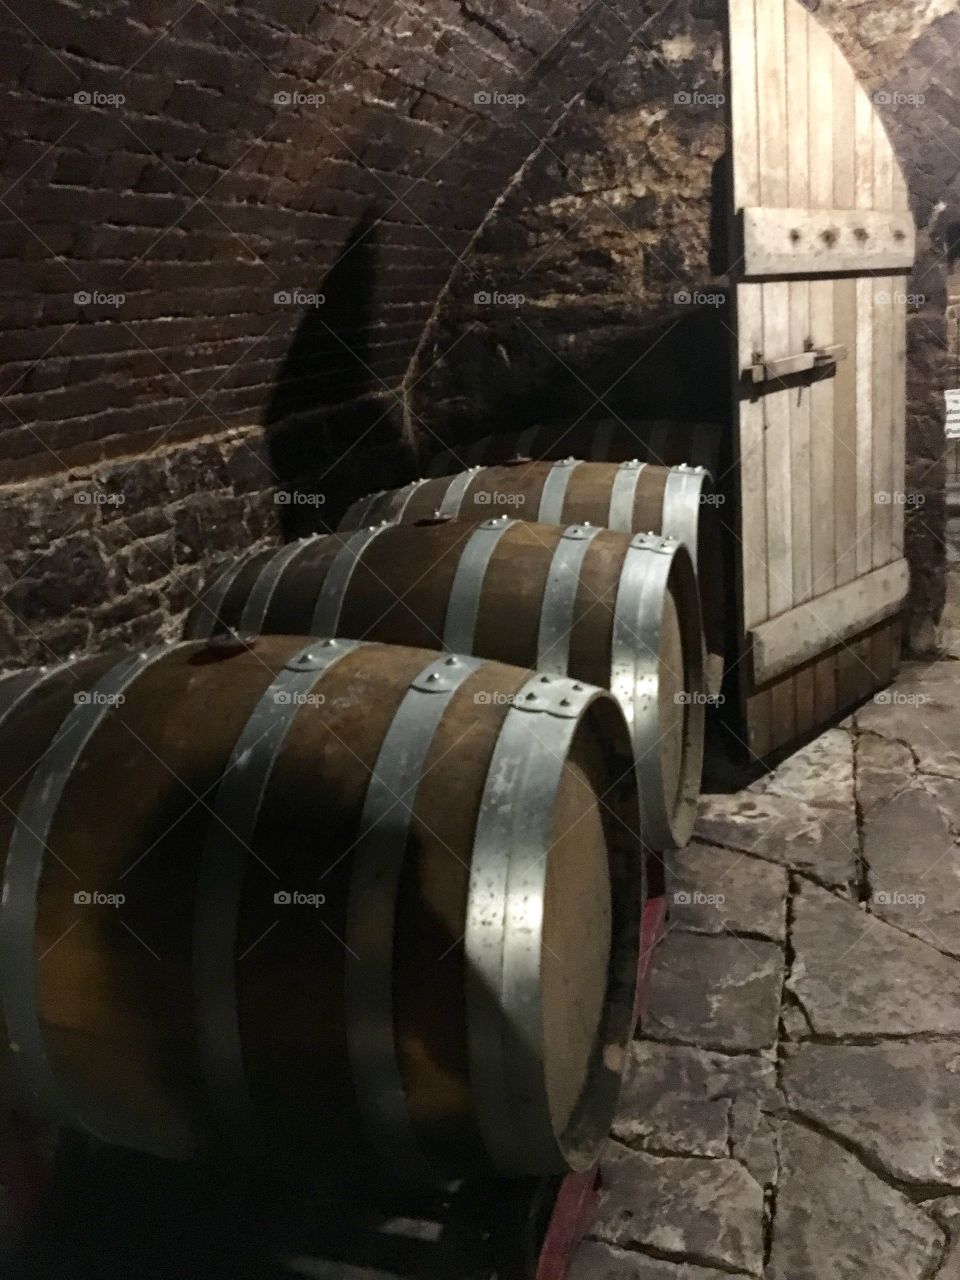 Wine cellar barrels